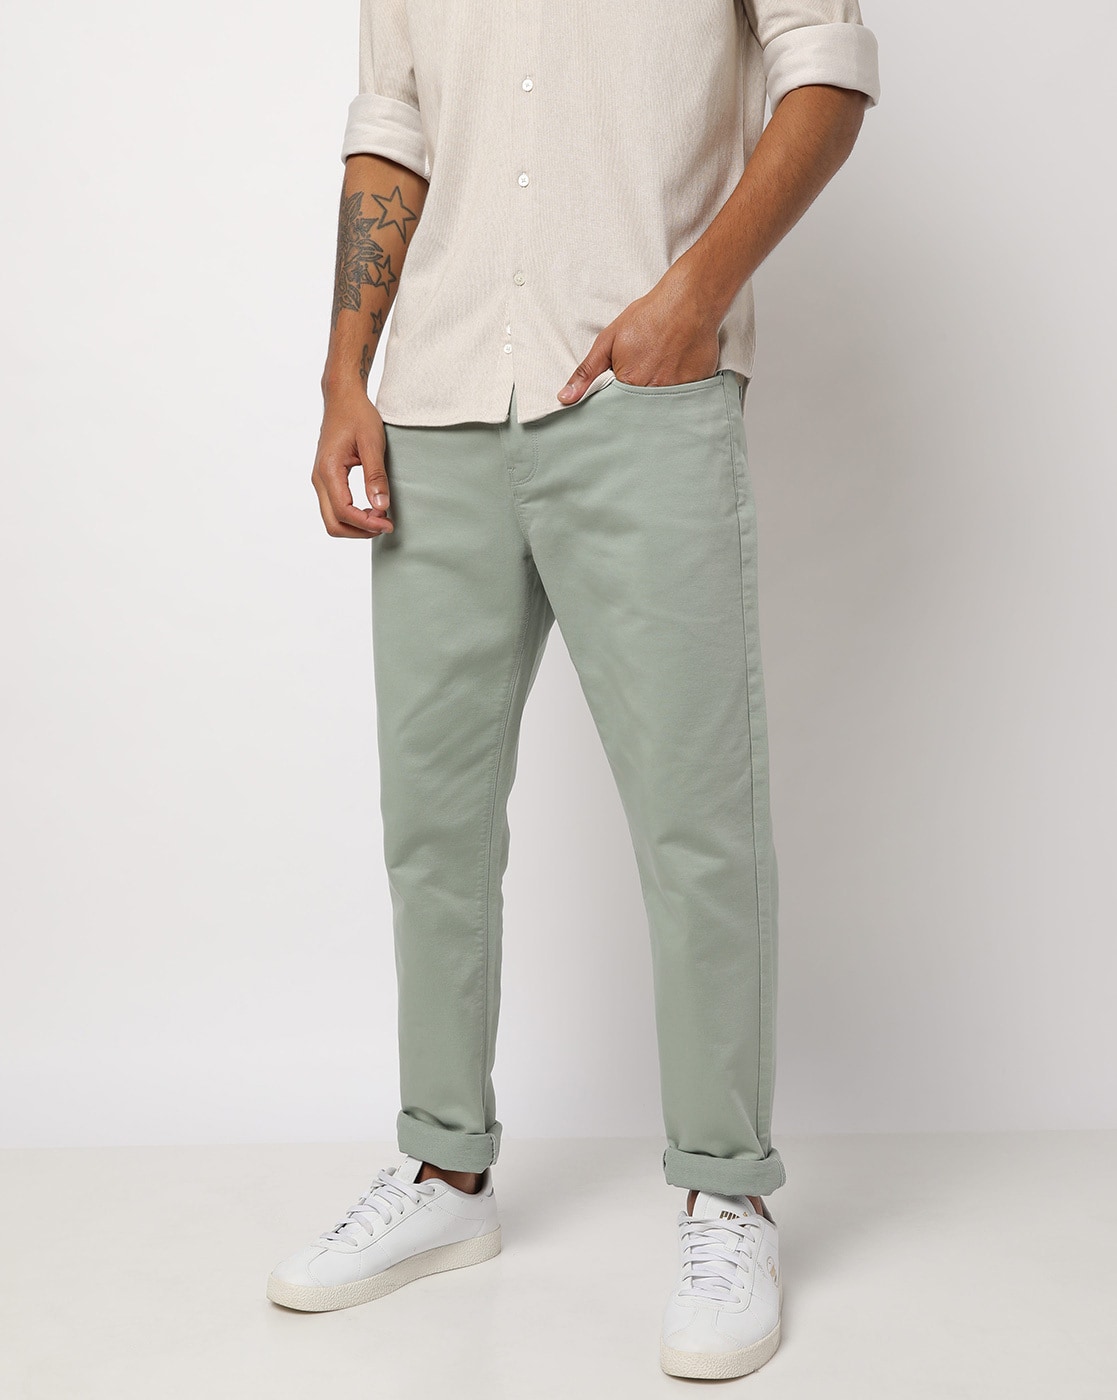 Buy Green Check Full Sleeves Shirt for Men Online at SELECTED HOMME  |129587001